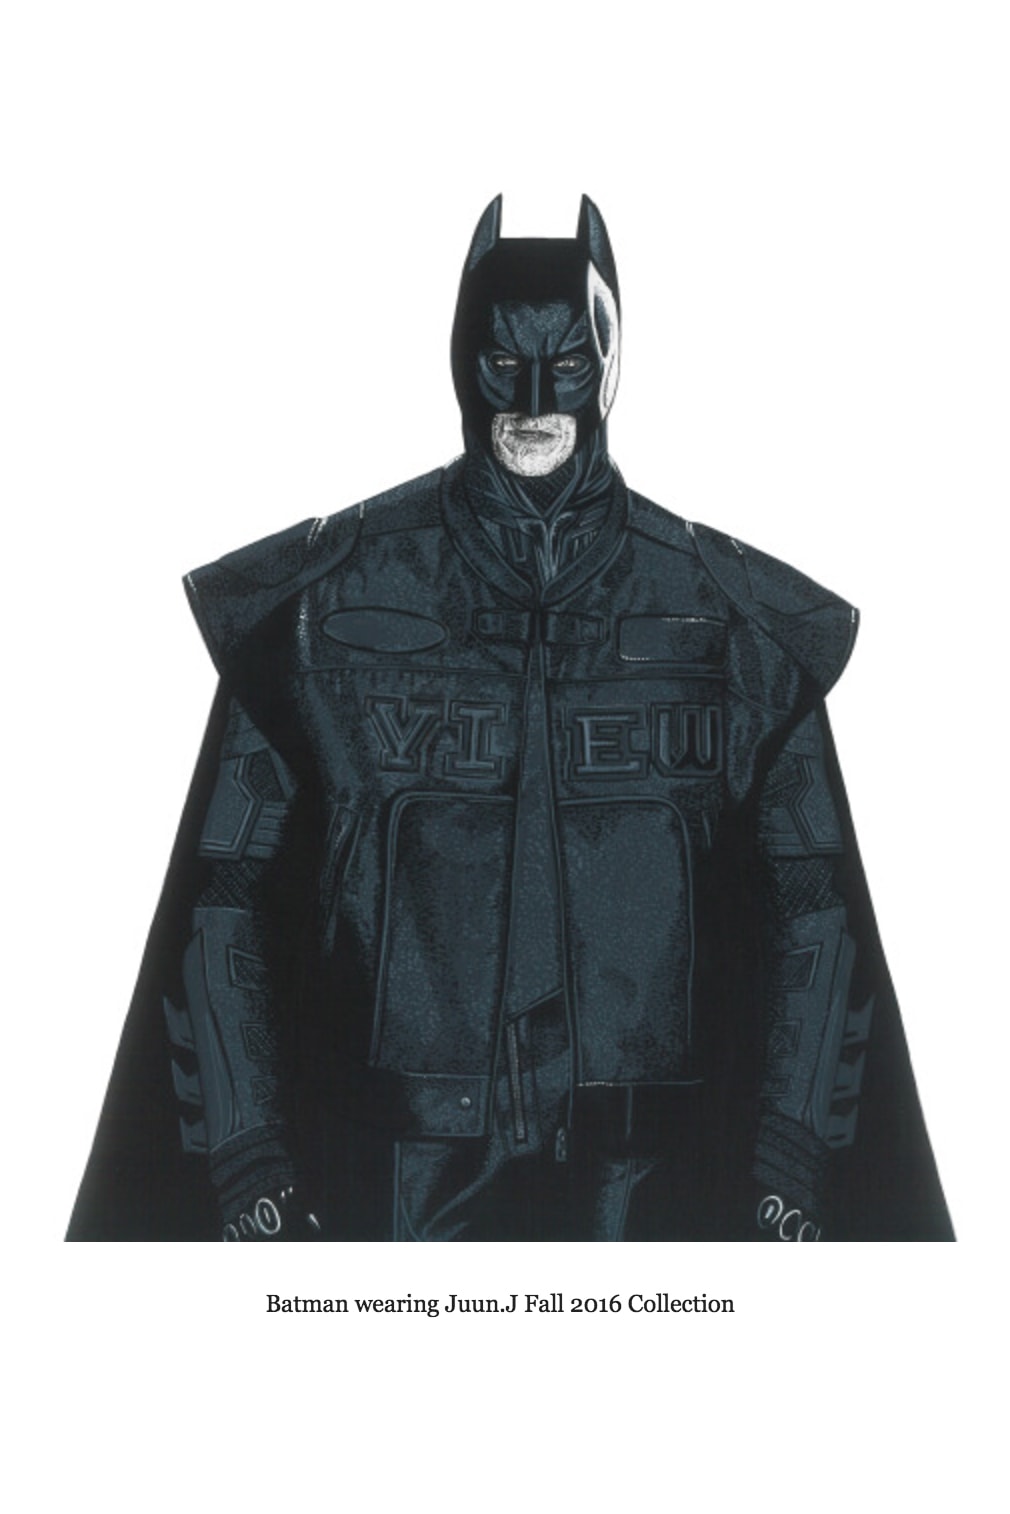 David Murray Streetwear Characters Drawings Comic Graphic novels Batman Joker Kill bill Illustrations Yeezy Vetements